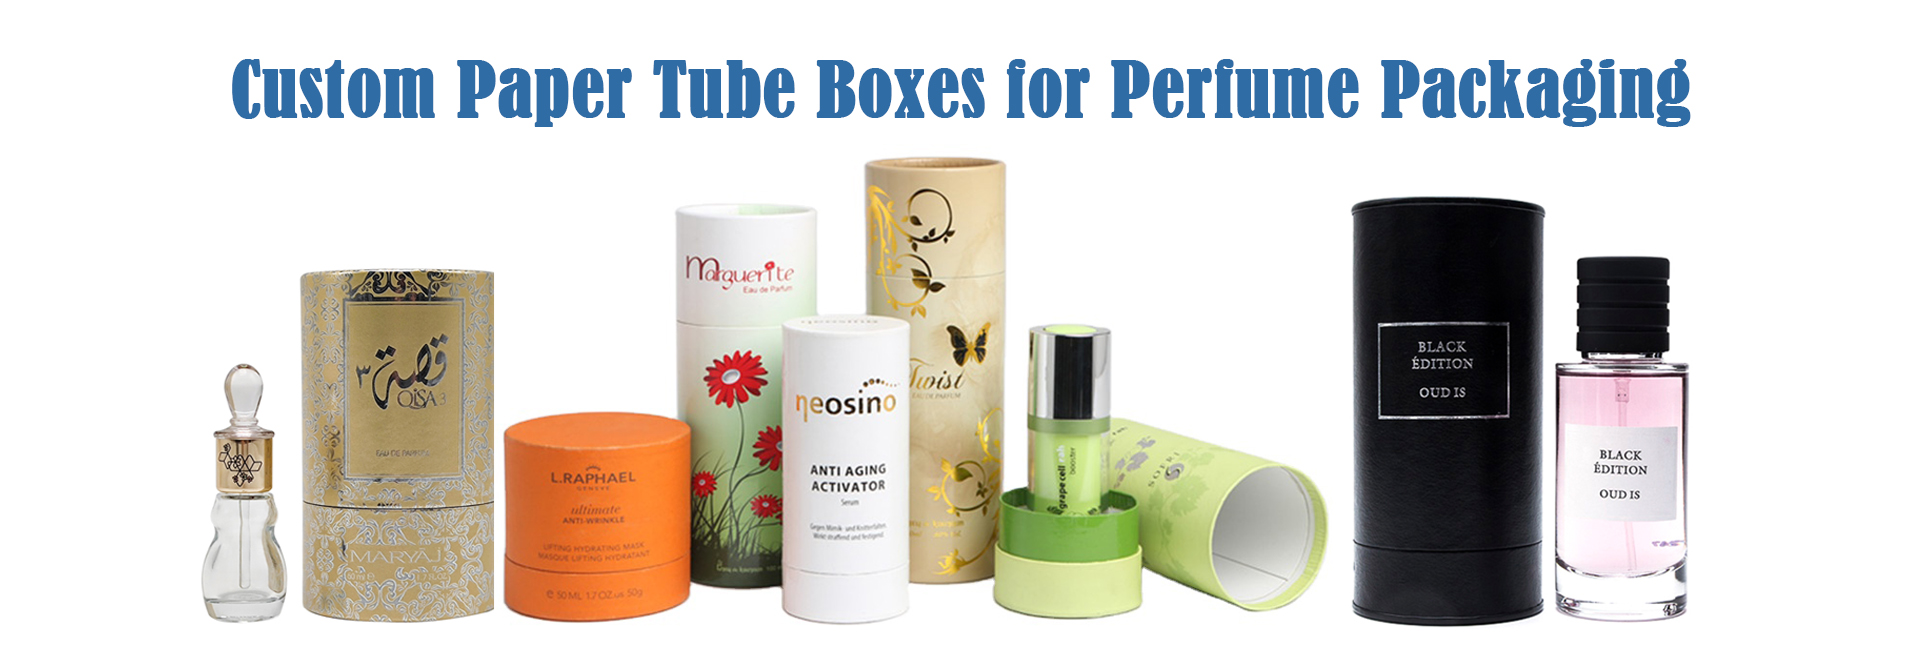 Custom Paper Tube Boxes for Perfume Packaging 